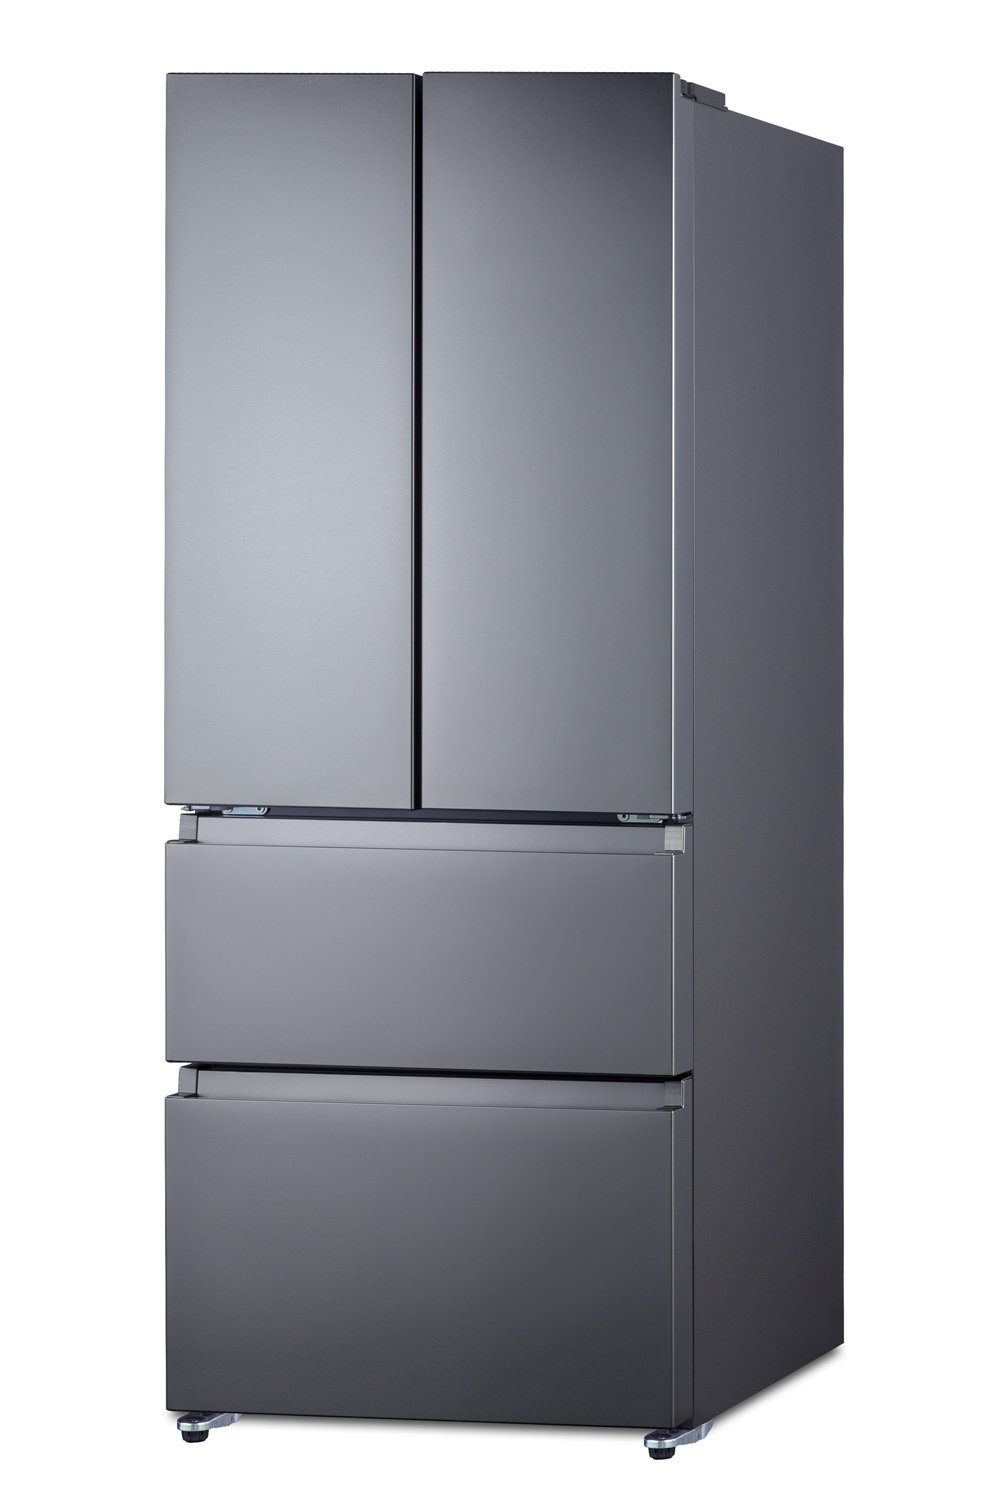 SUMMIT 27.5" Wide French Door Refrigerator-Freezer